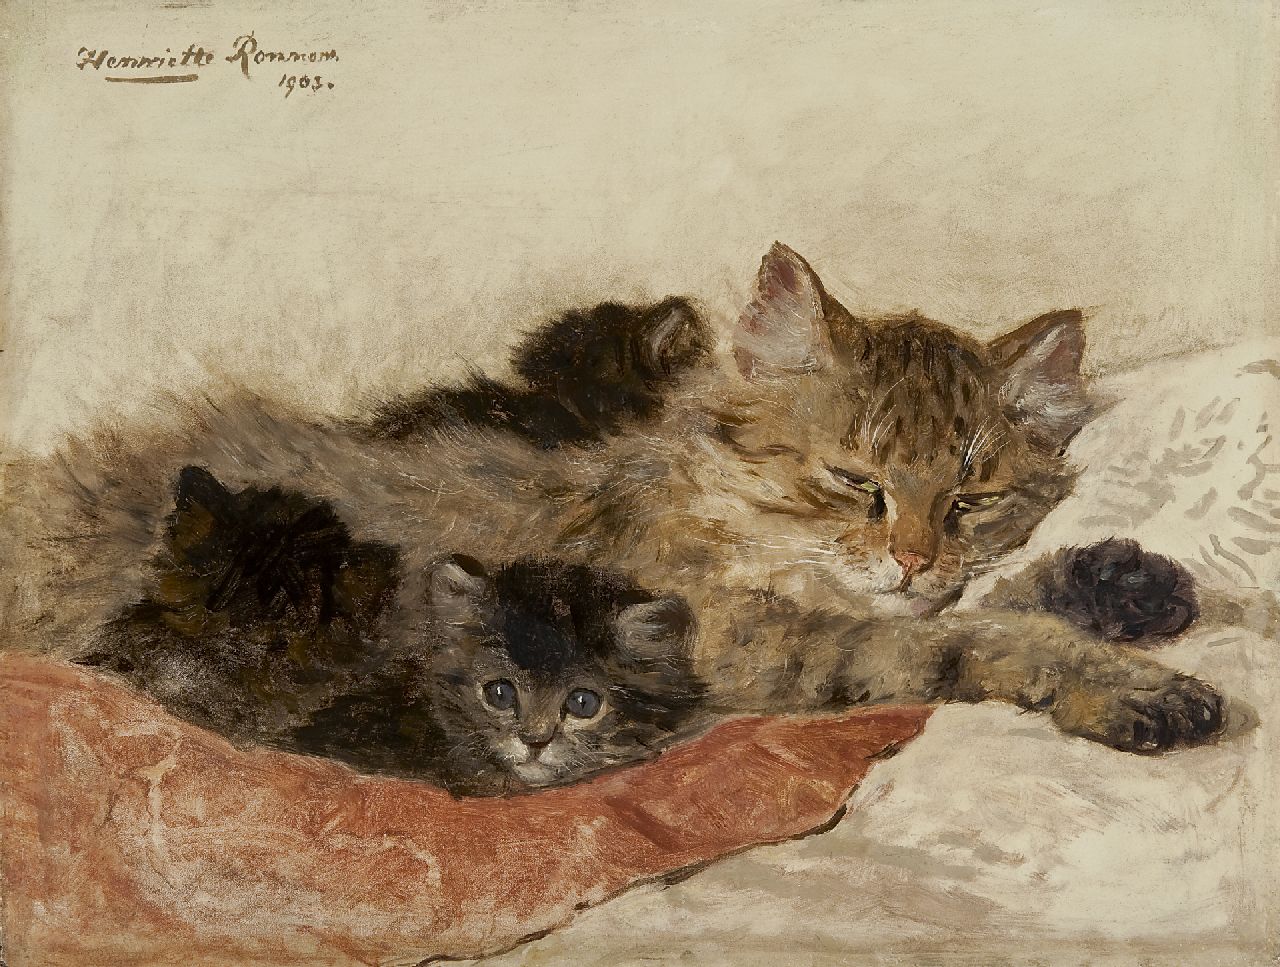 Ronner-Knip H.  | Henriette Ronner-Knip, Dozing cat with her kittens, Öl auf Holz 27,9 x 36,5 cm, signed u.l. und dated 1903